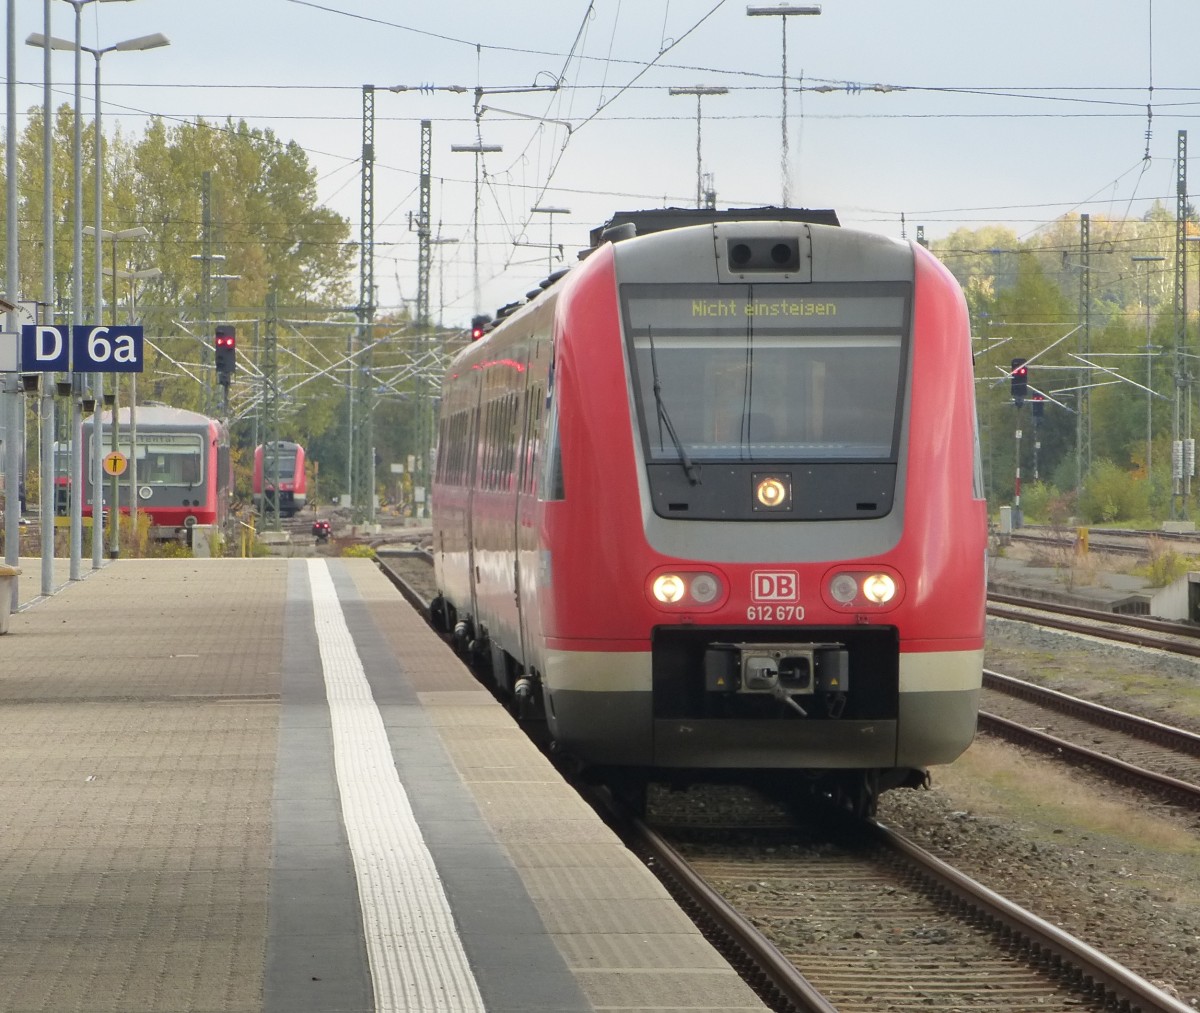 612 670 is leaving Hof main station on Oktober 12th 2013.